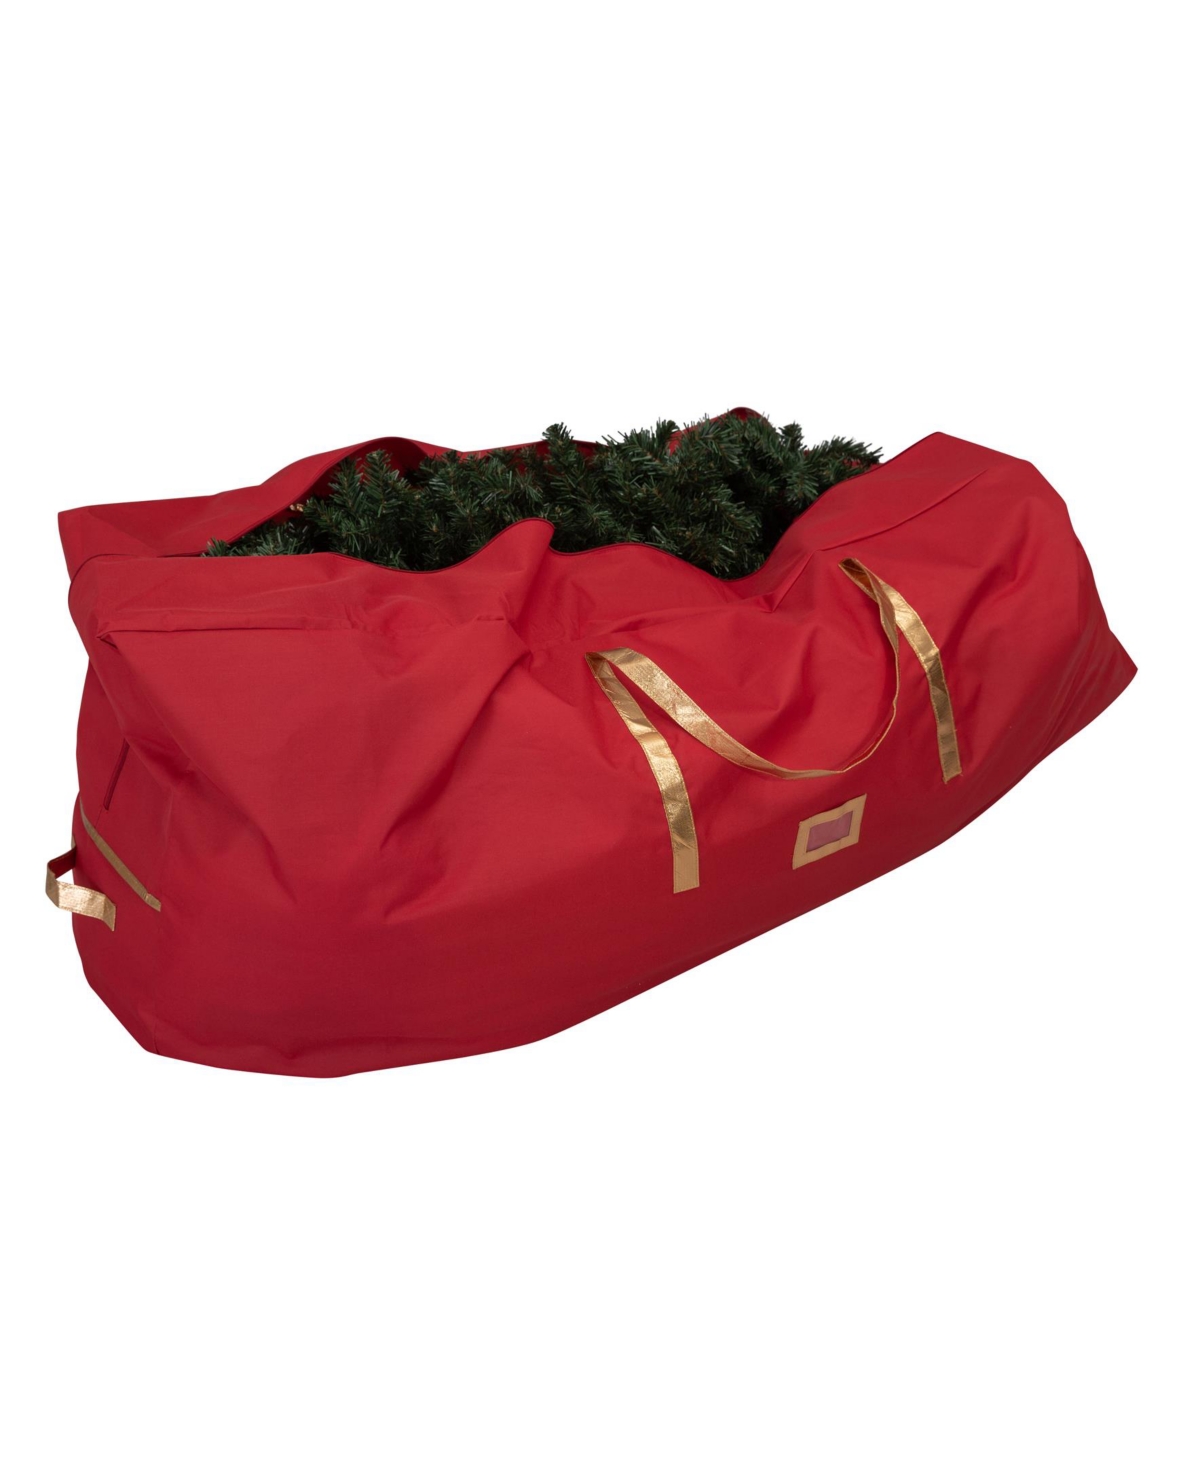 Heavy Duty Holiday Decor Storage Bag - Red